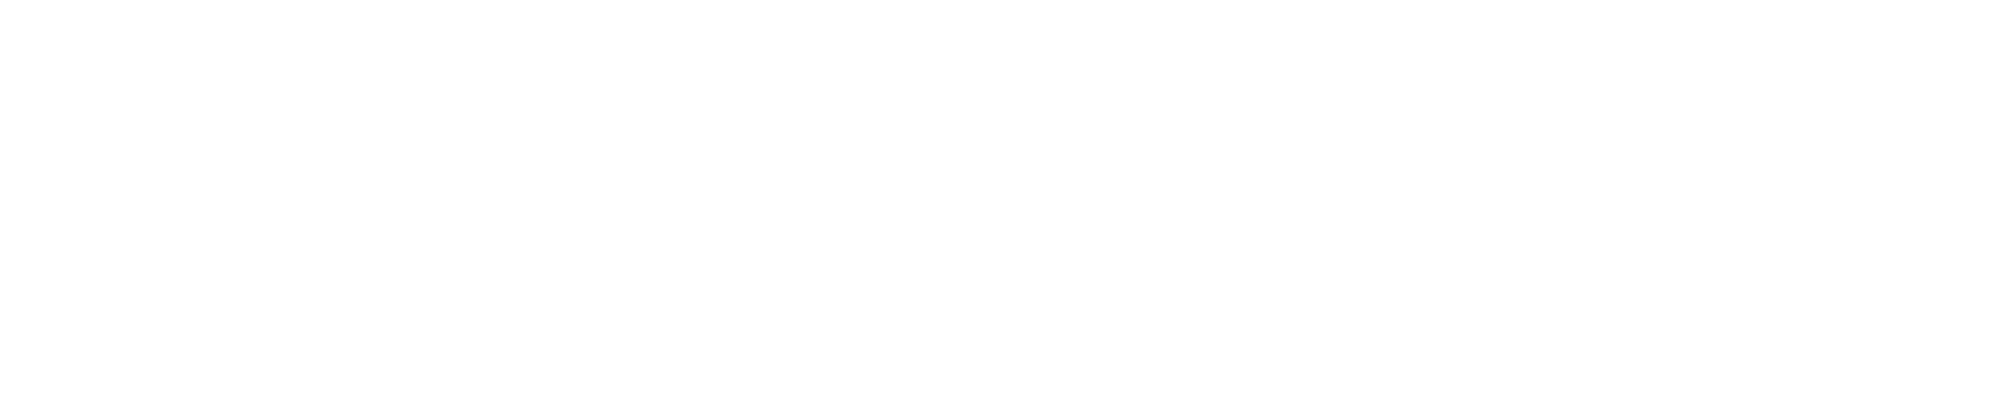 Gulp: A Gas Station Simulator